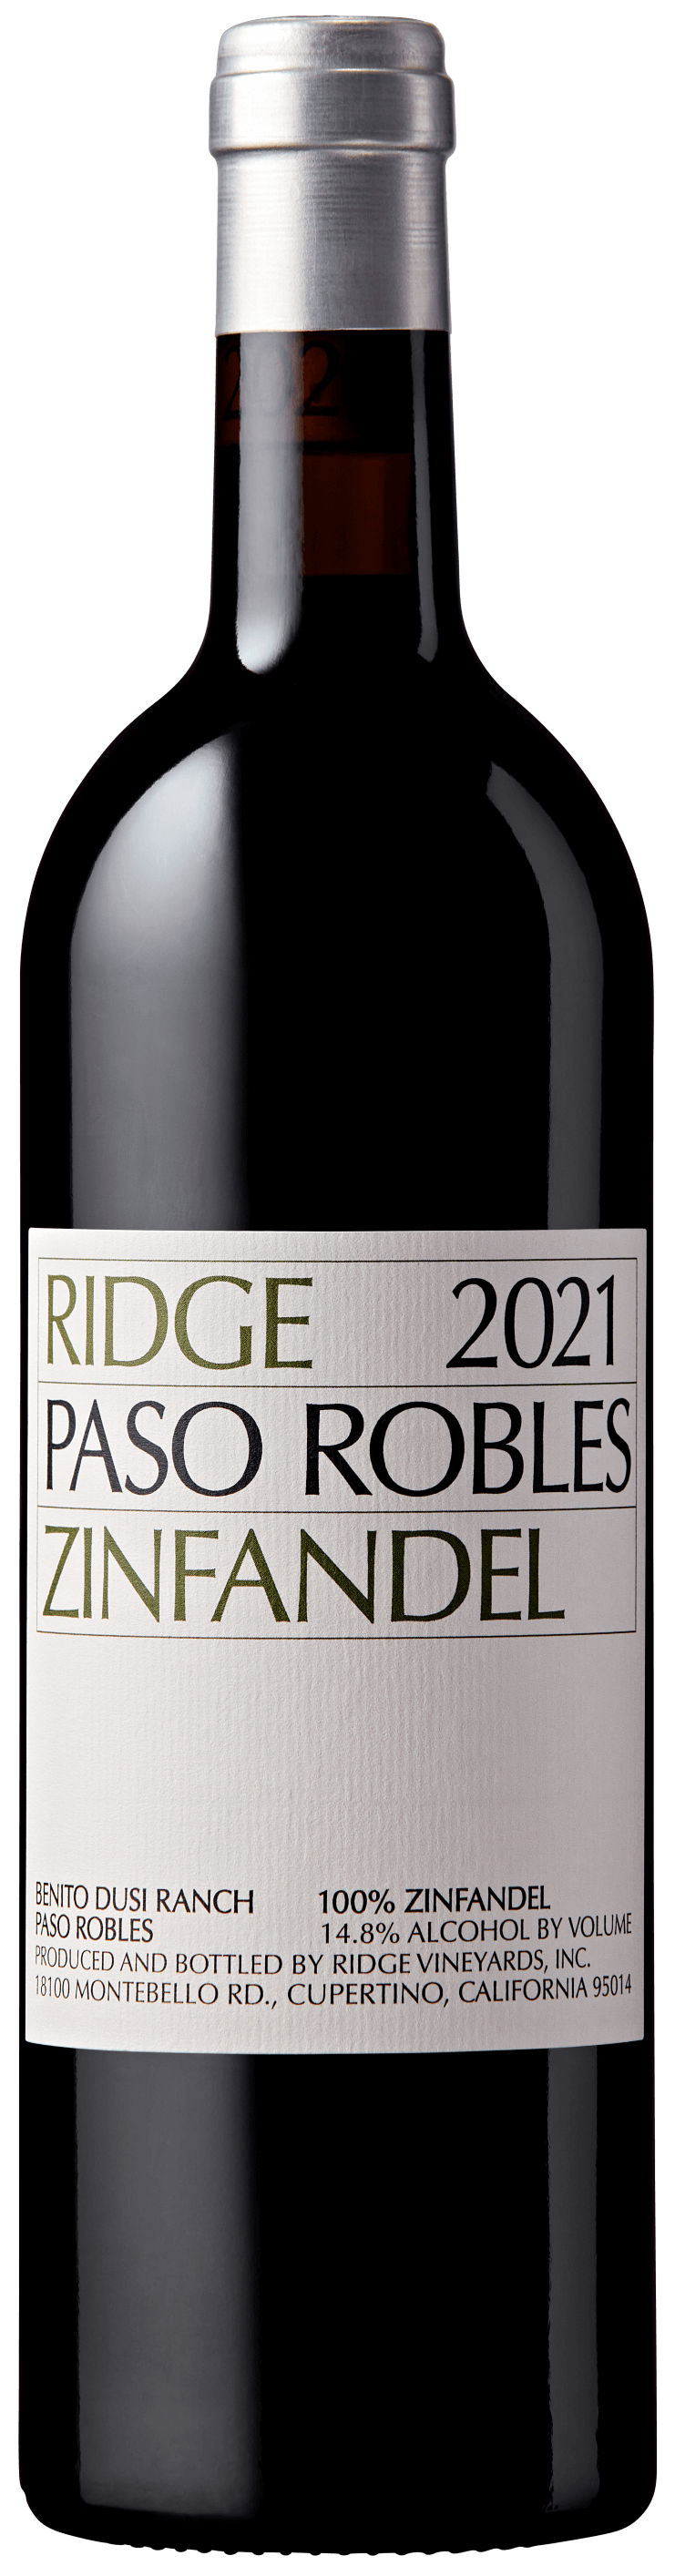 2021 Paso Robles Zinfandel